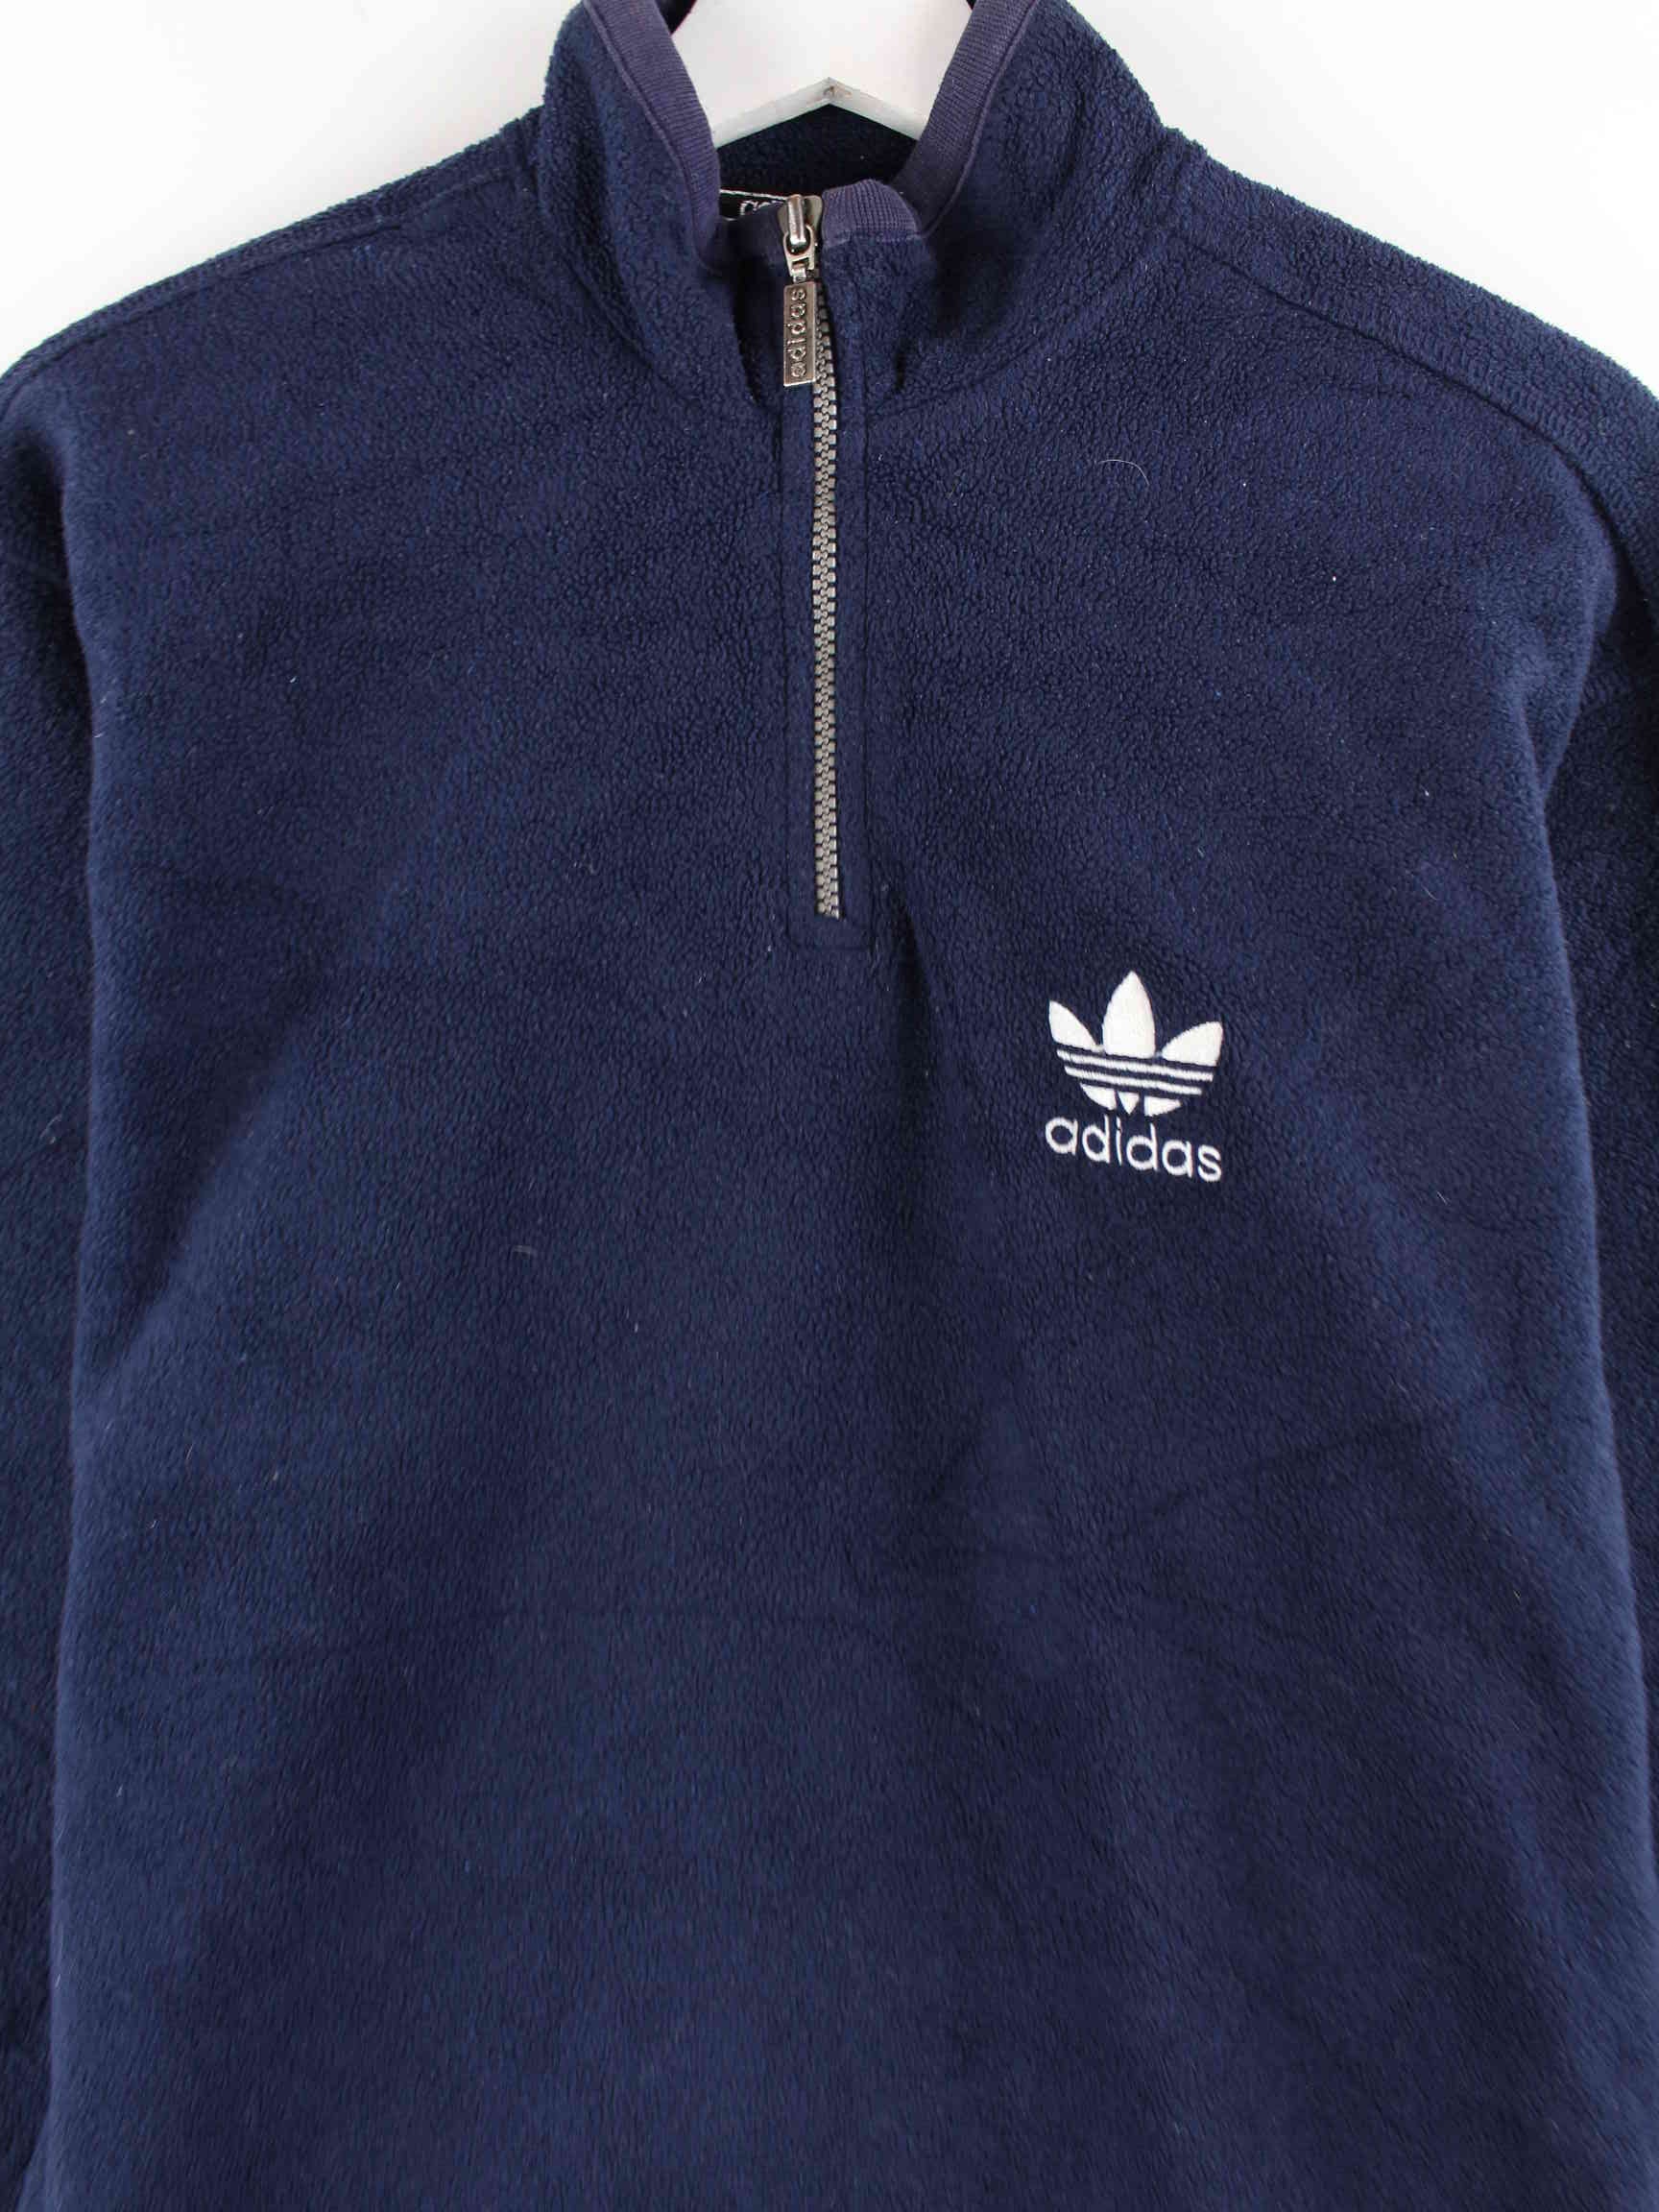 Adidas Damen 90s Vintage half Zip Fleece Sweater Blau XS (detail image 1)